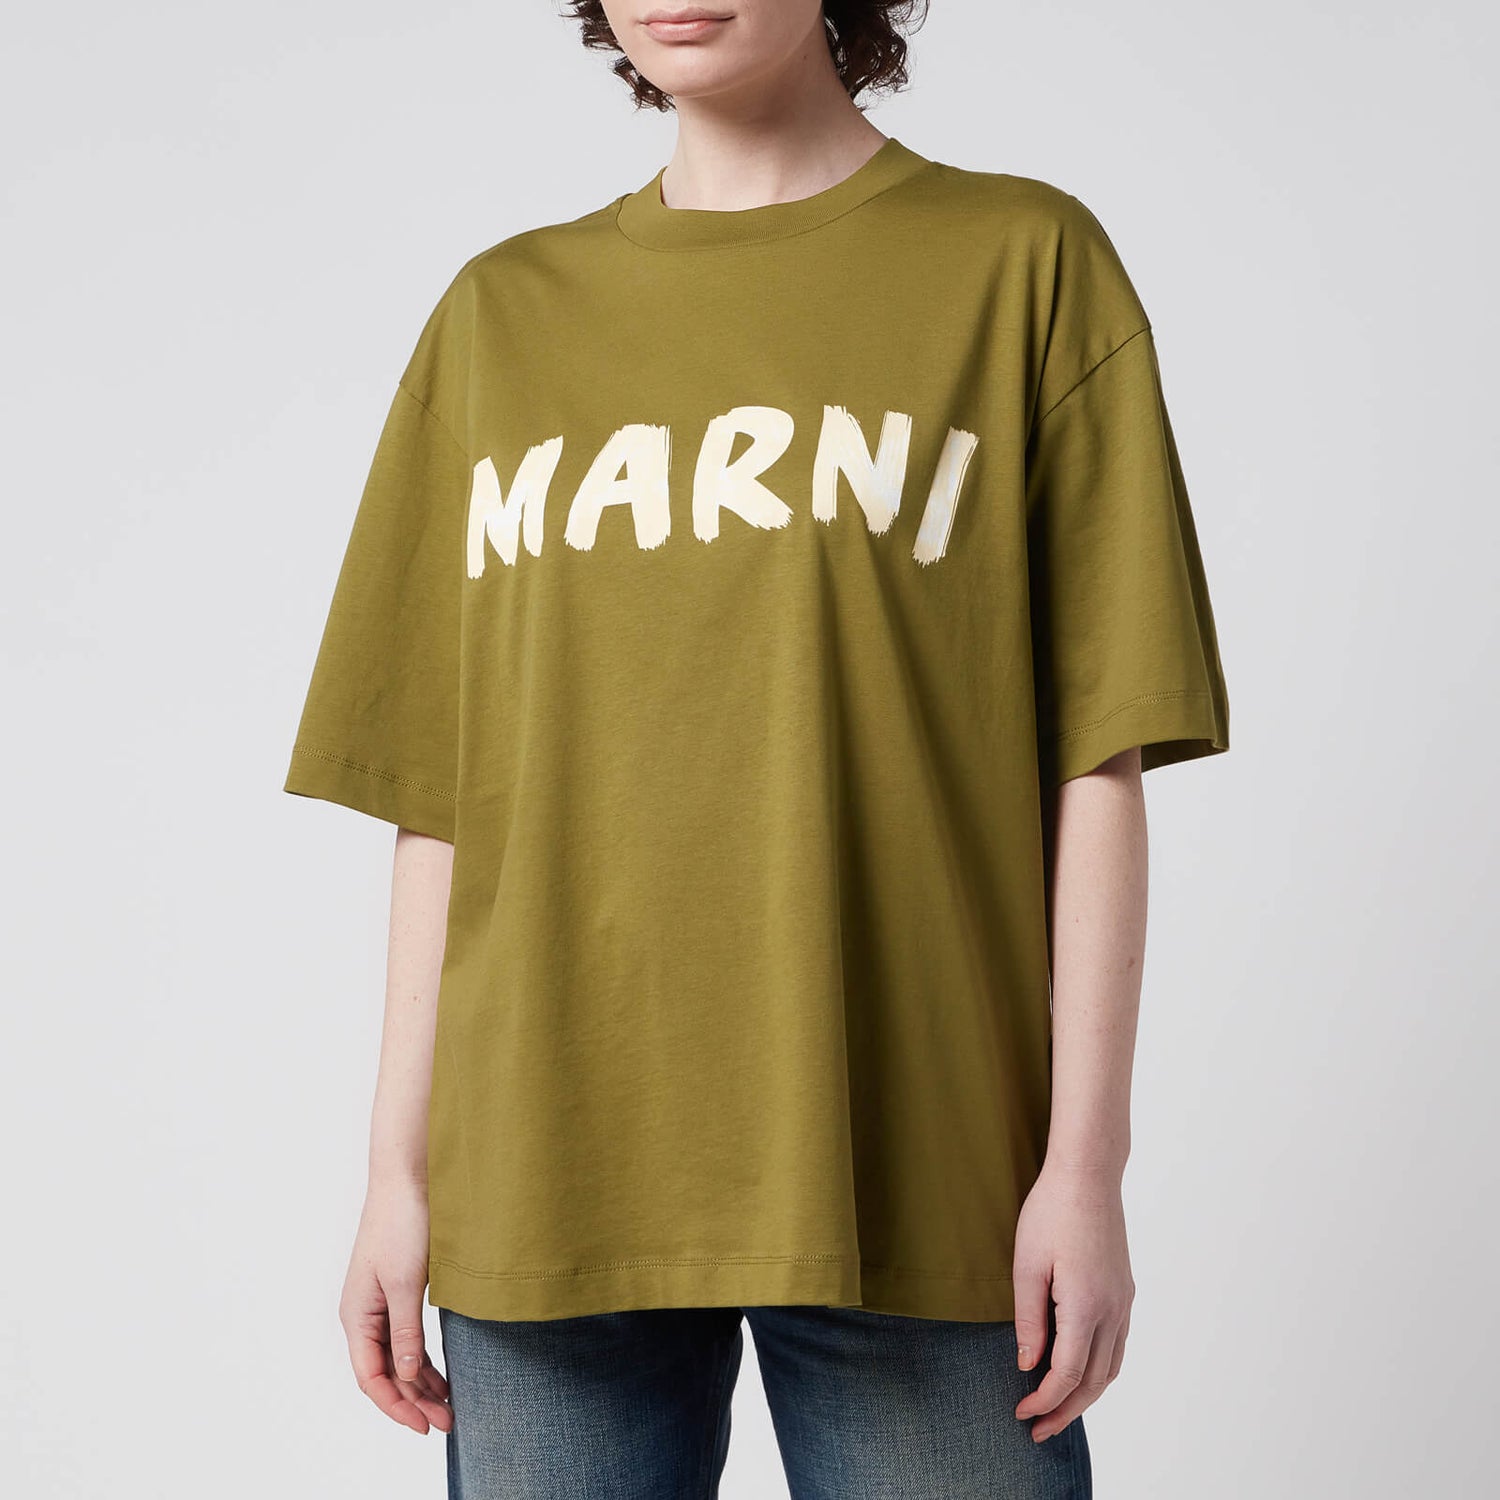 Marni Women's Logo T-Shirt - Dusty Olive